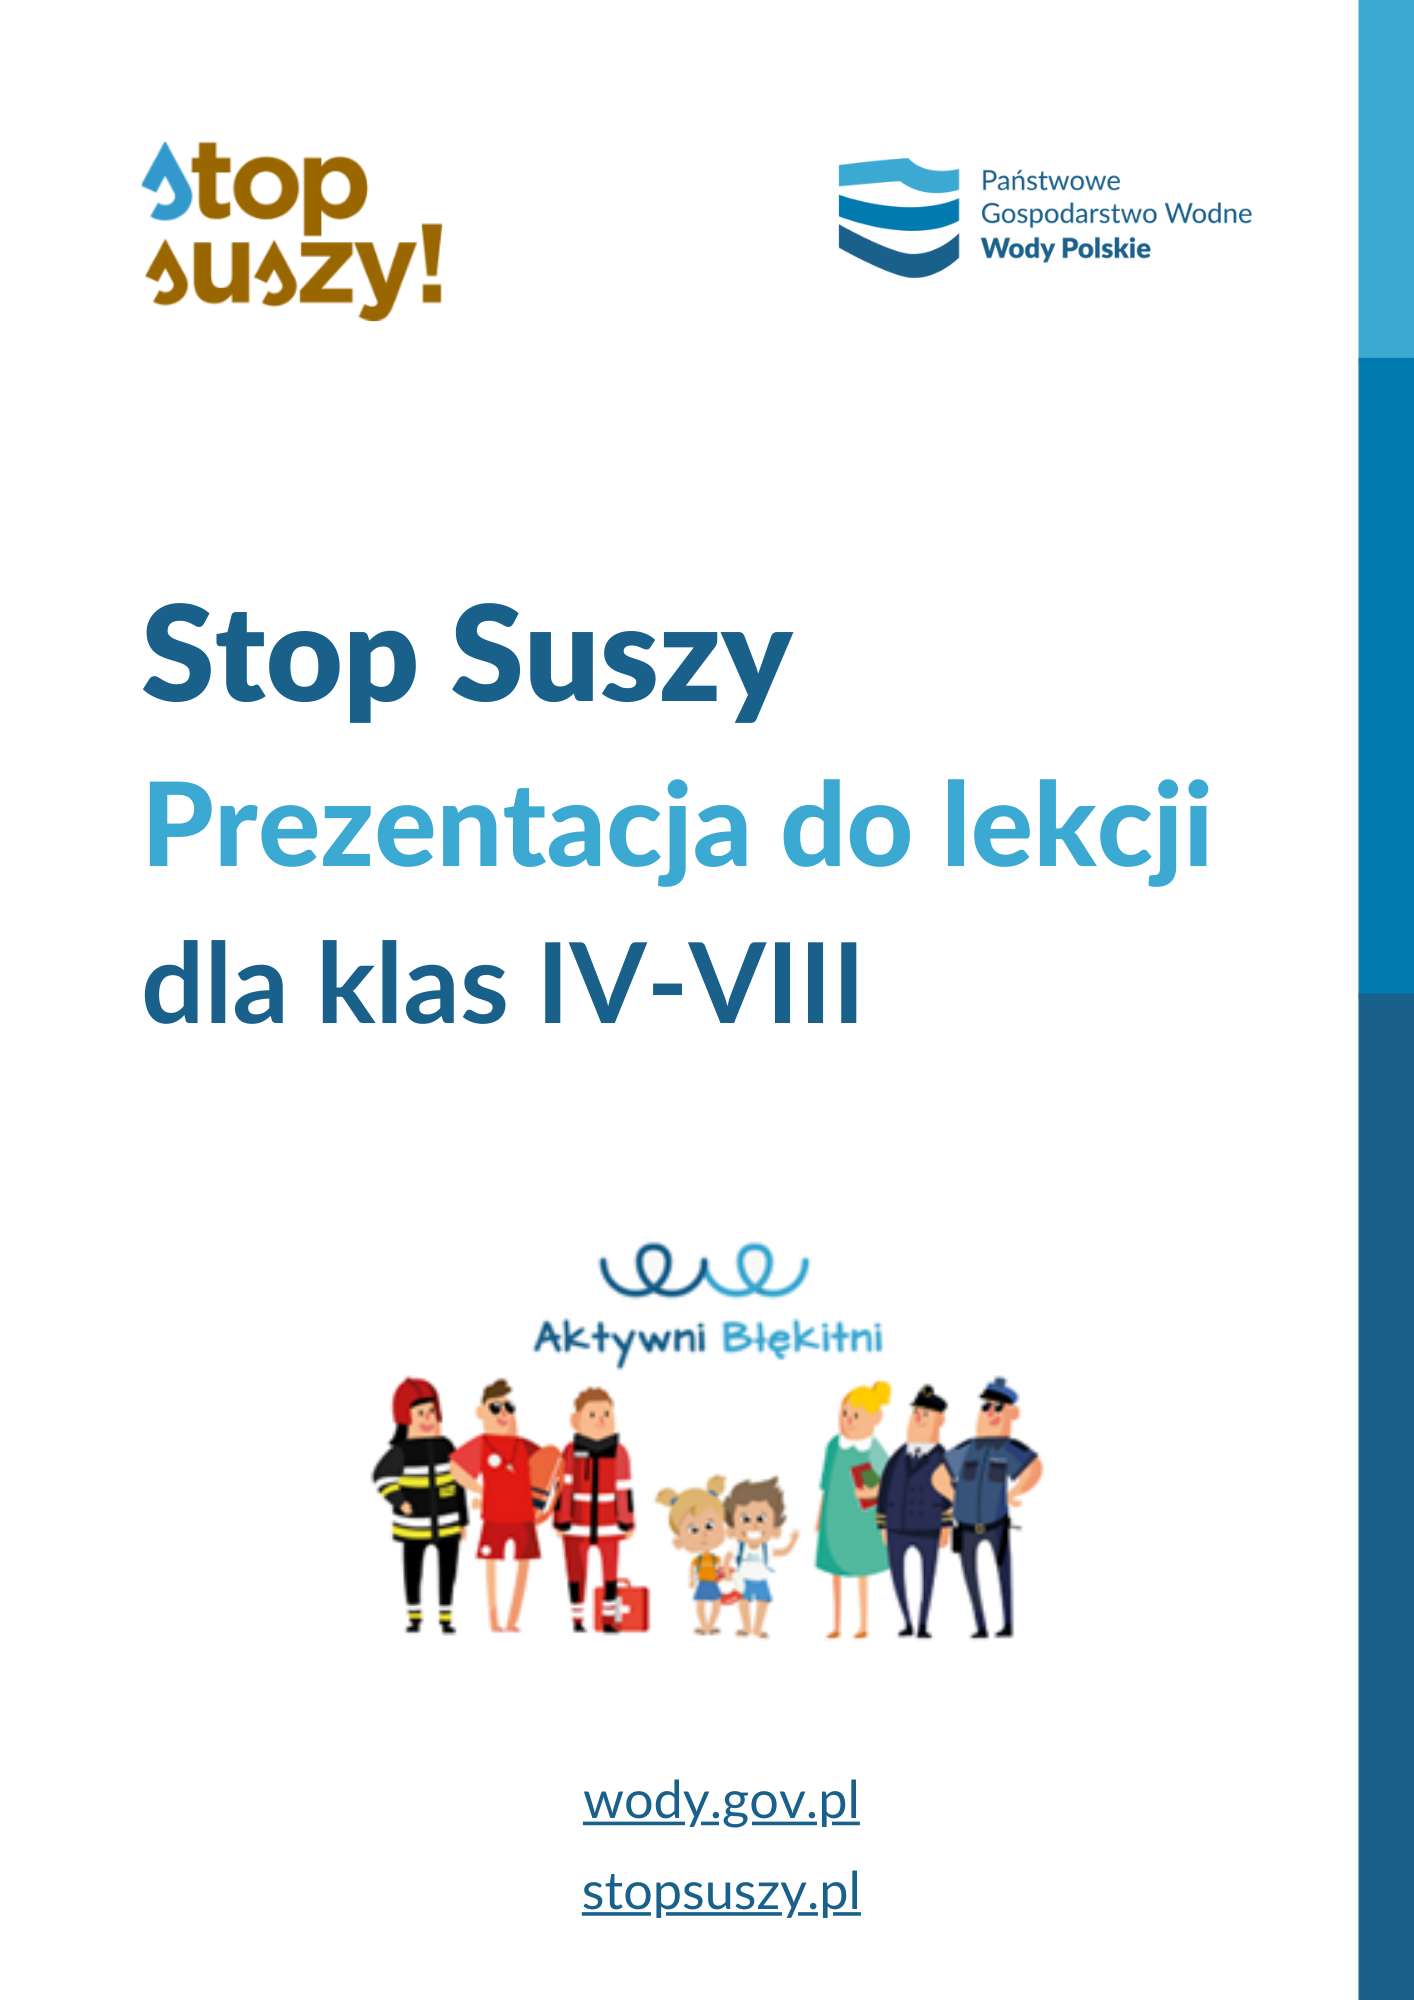 Stop Suszy - prezentacja dla klas IV-VIII